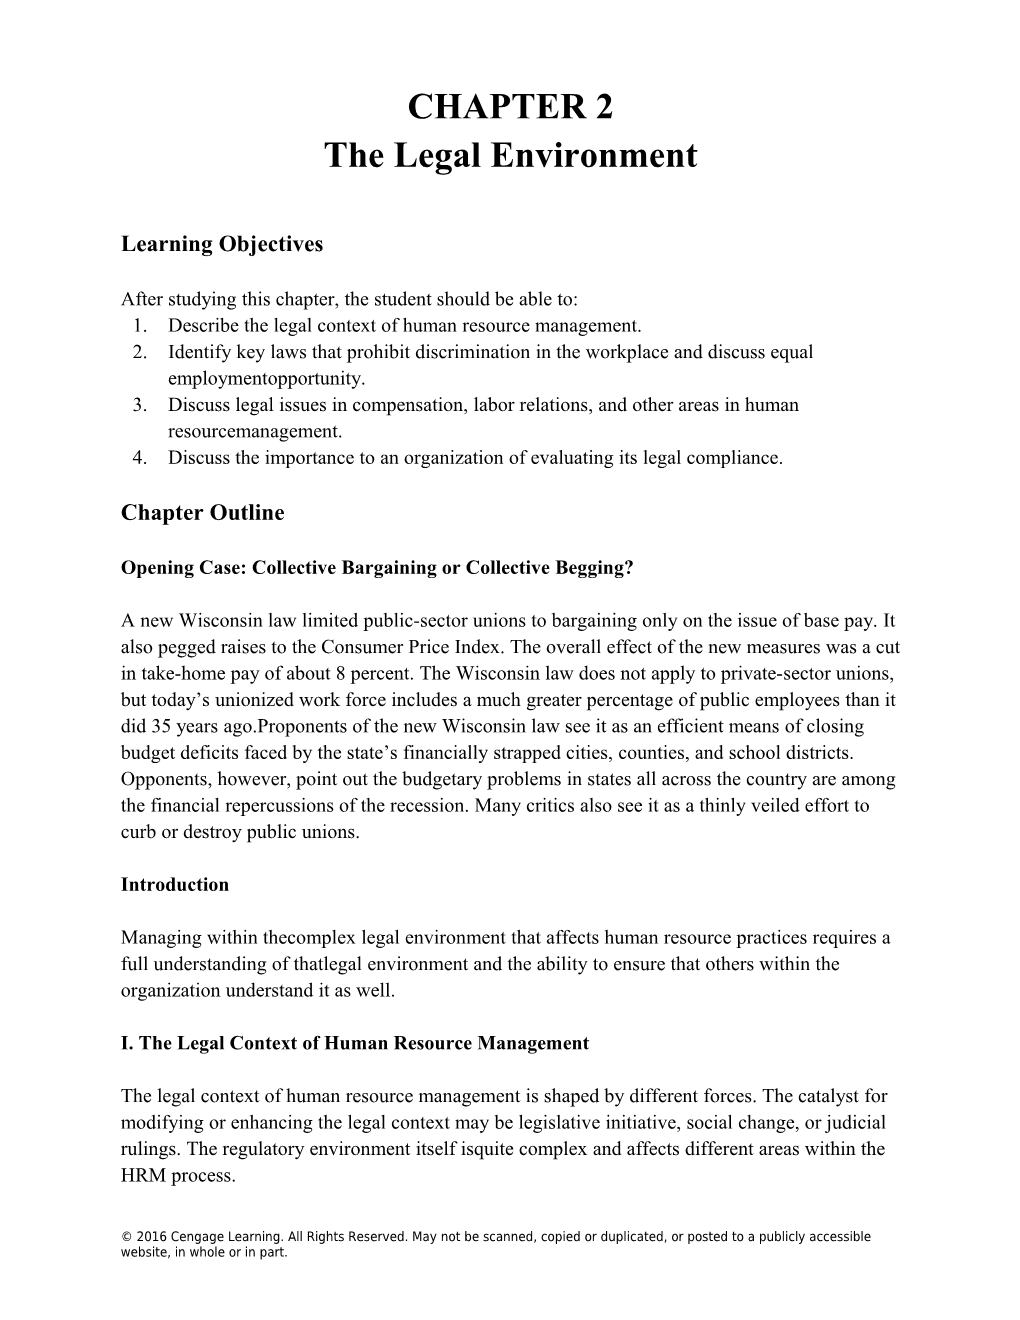 The Legal Environment